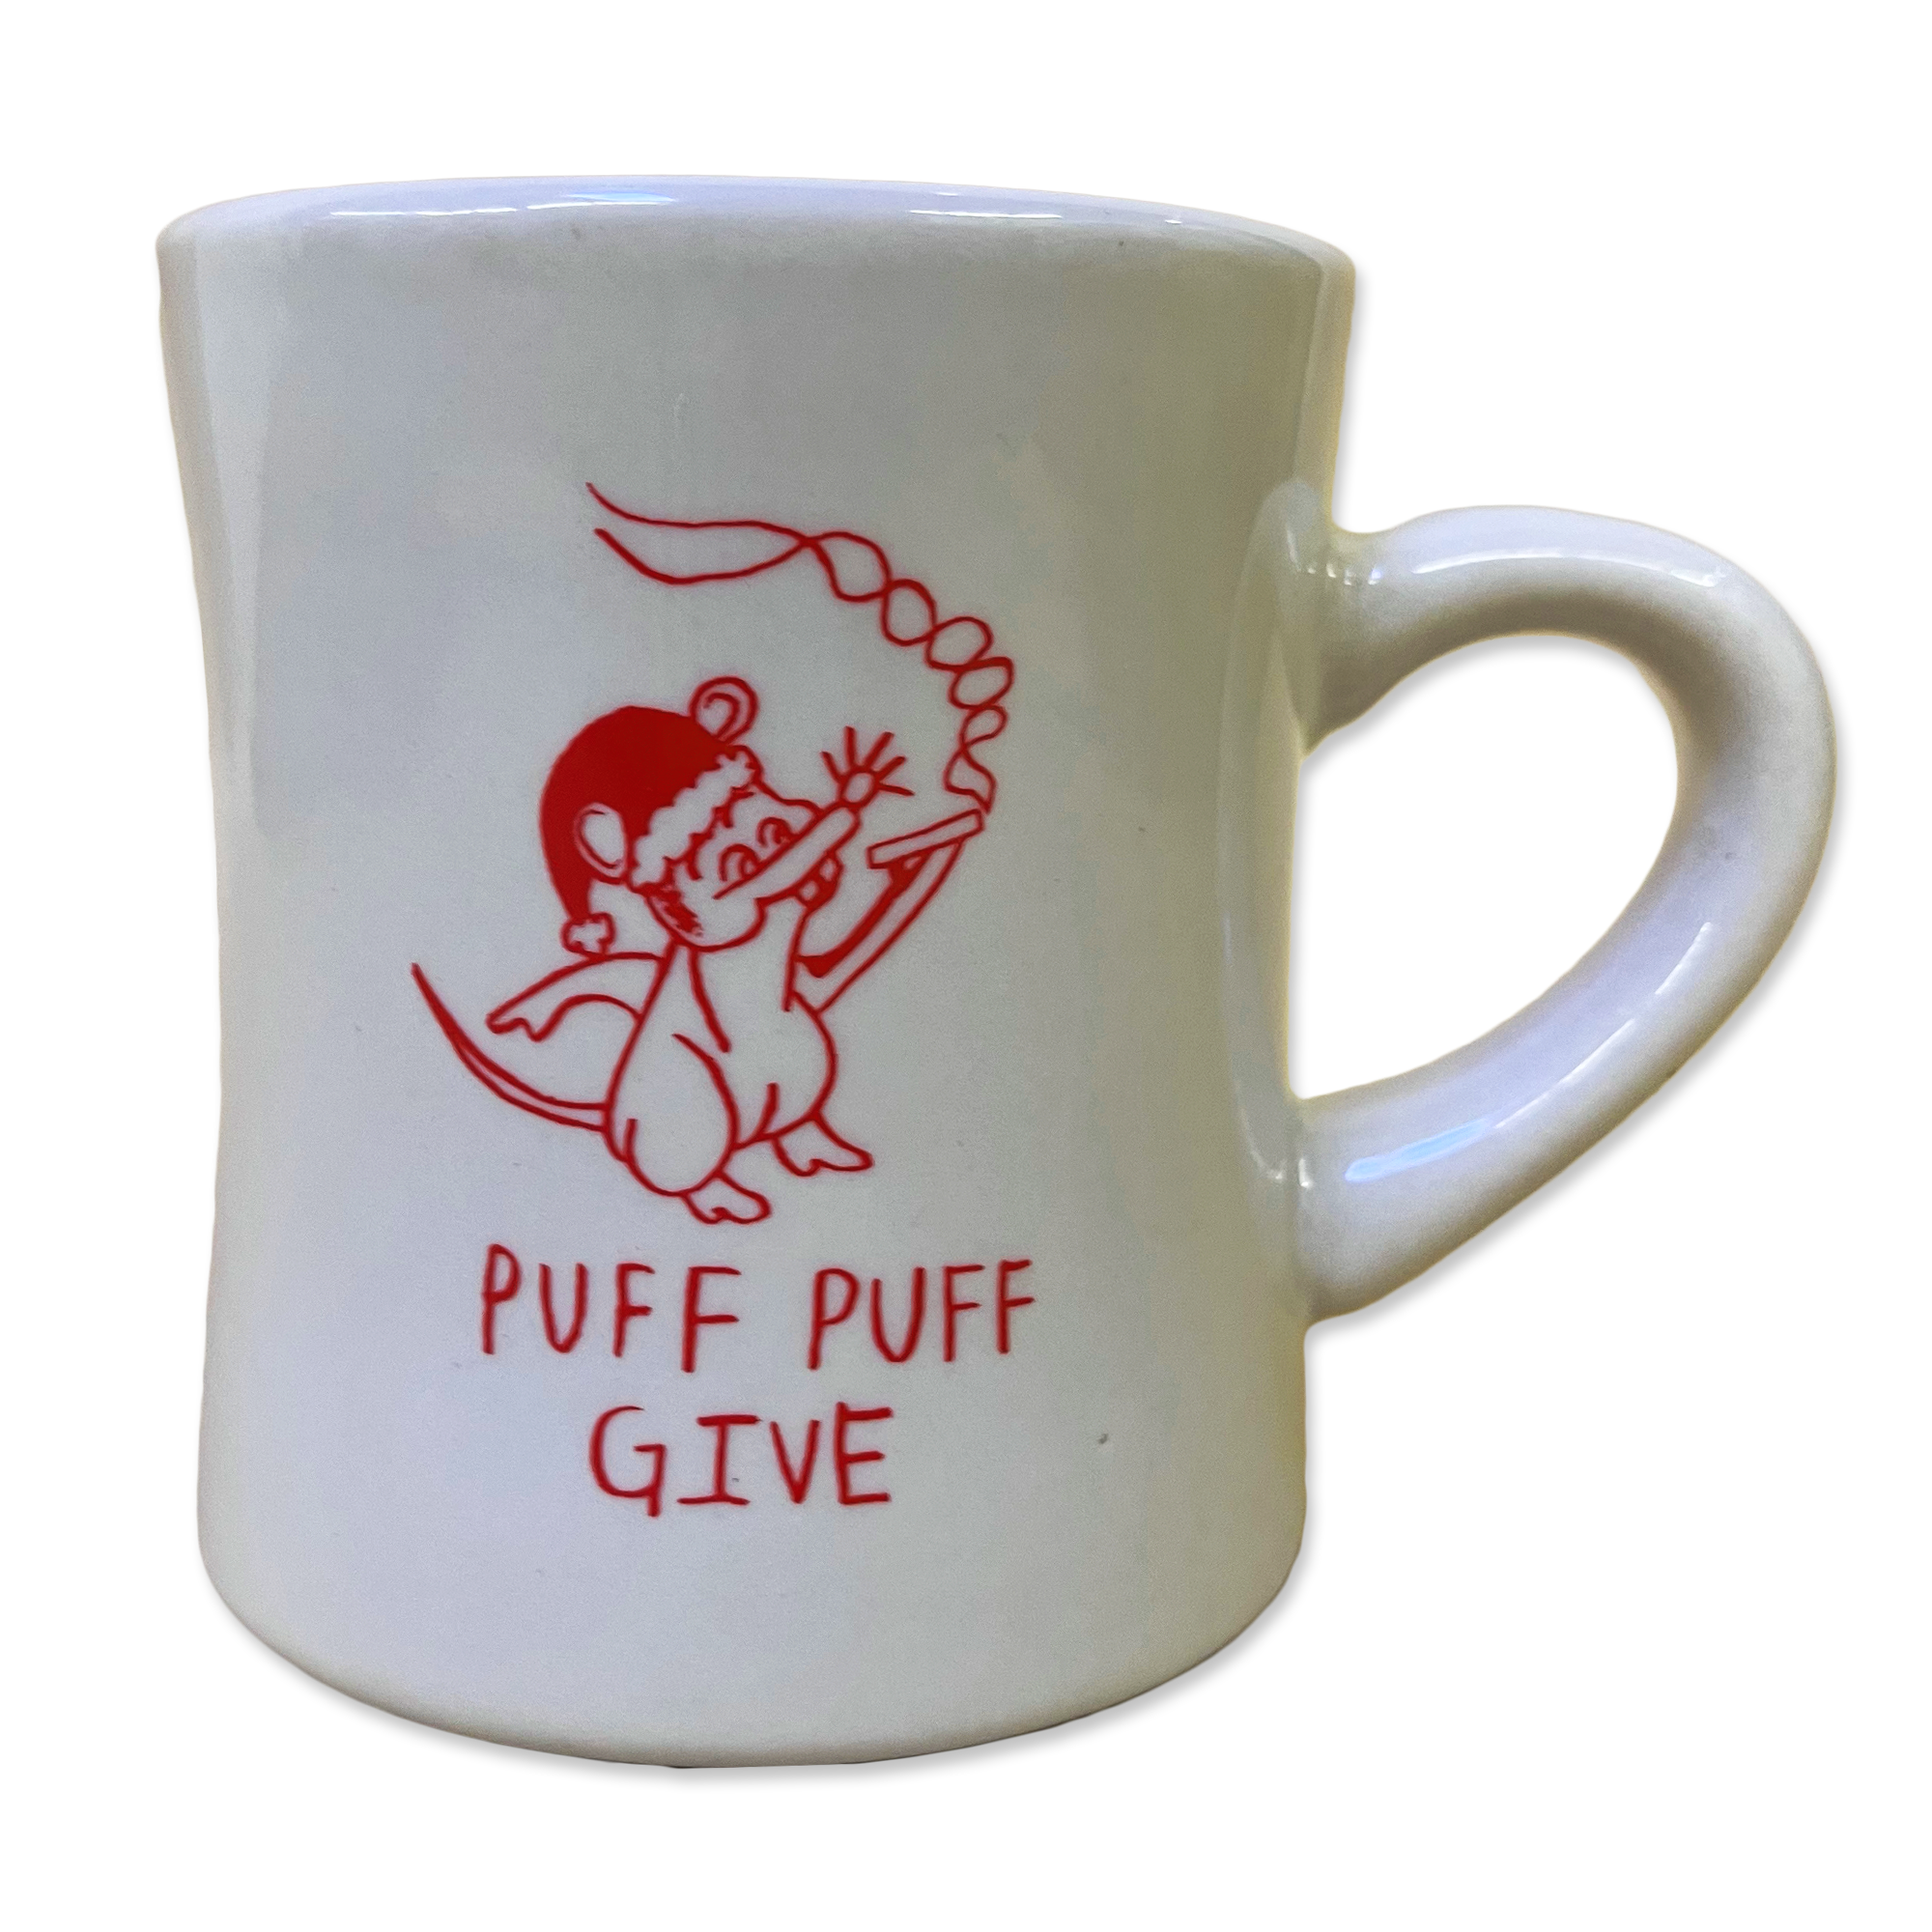 santas little helper puff puff give mug from puff coffee in portland oregon